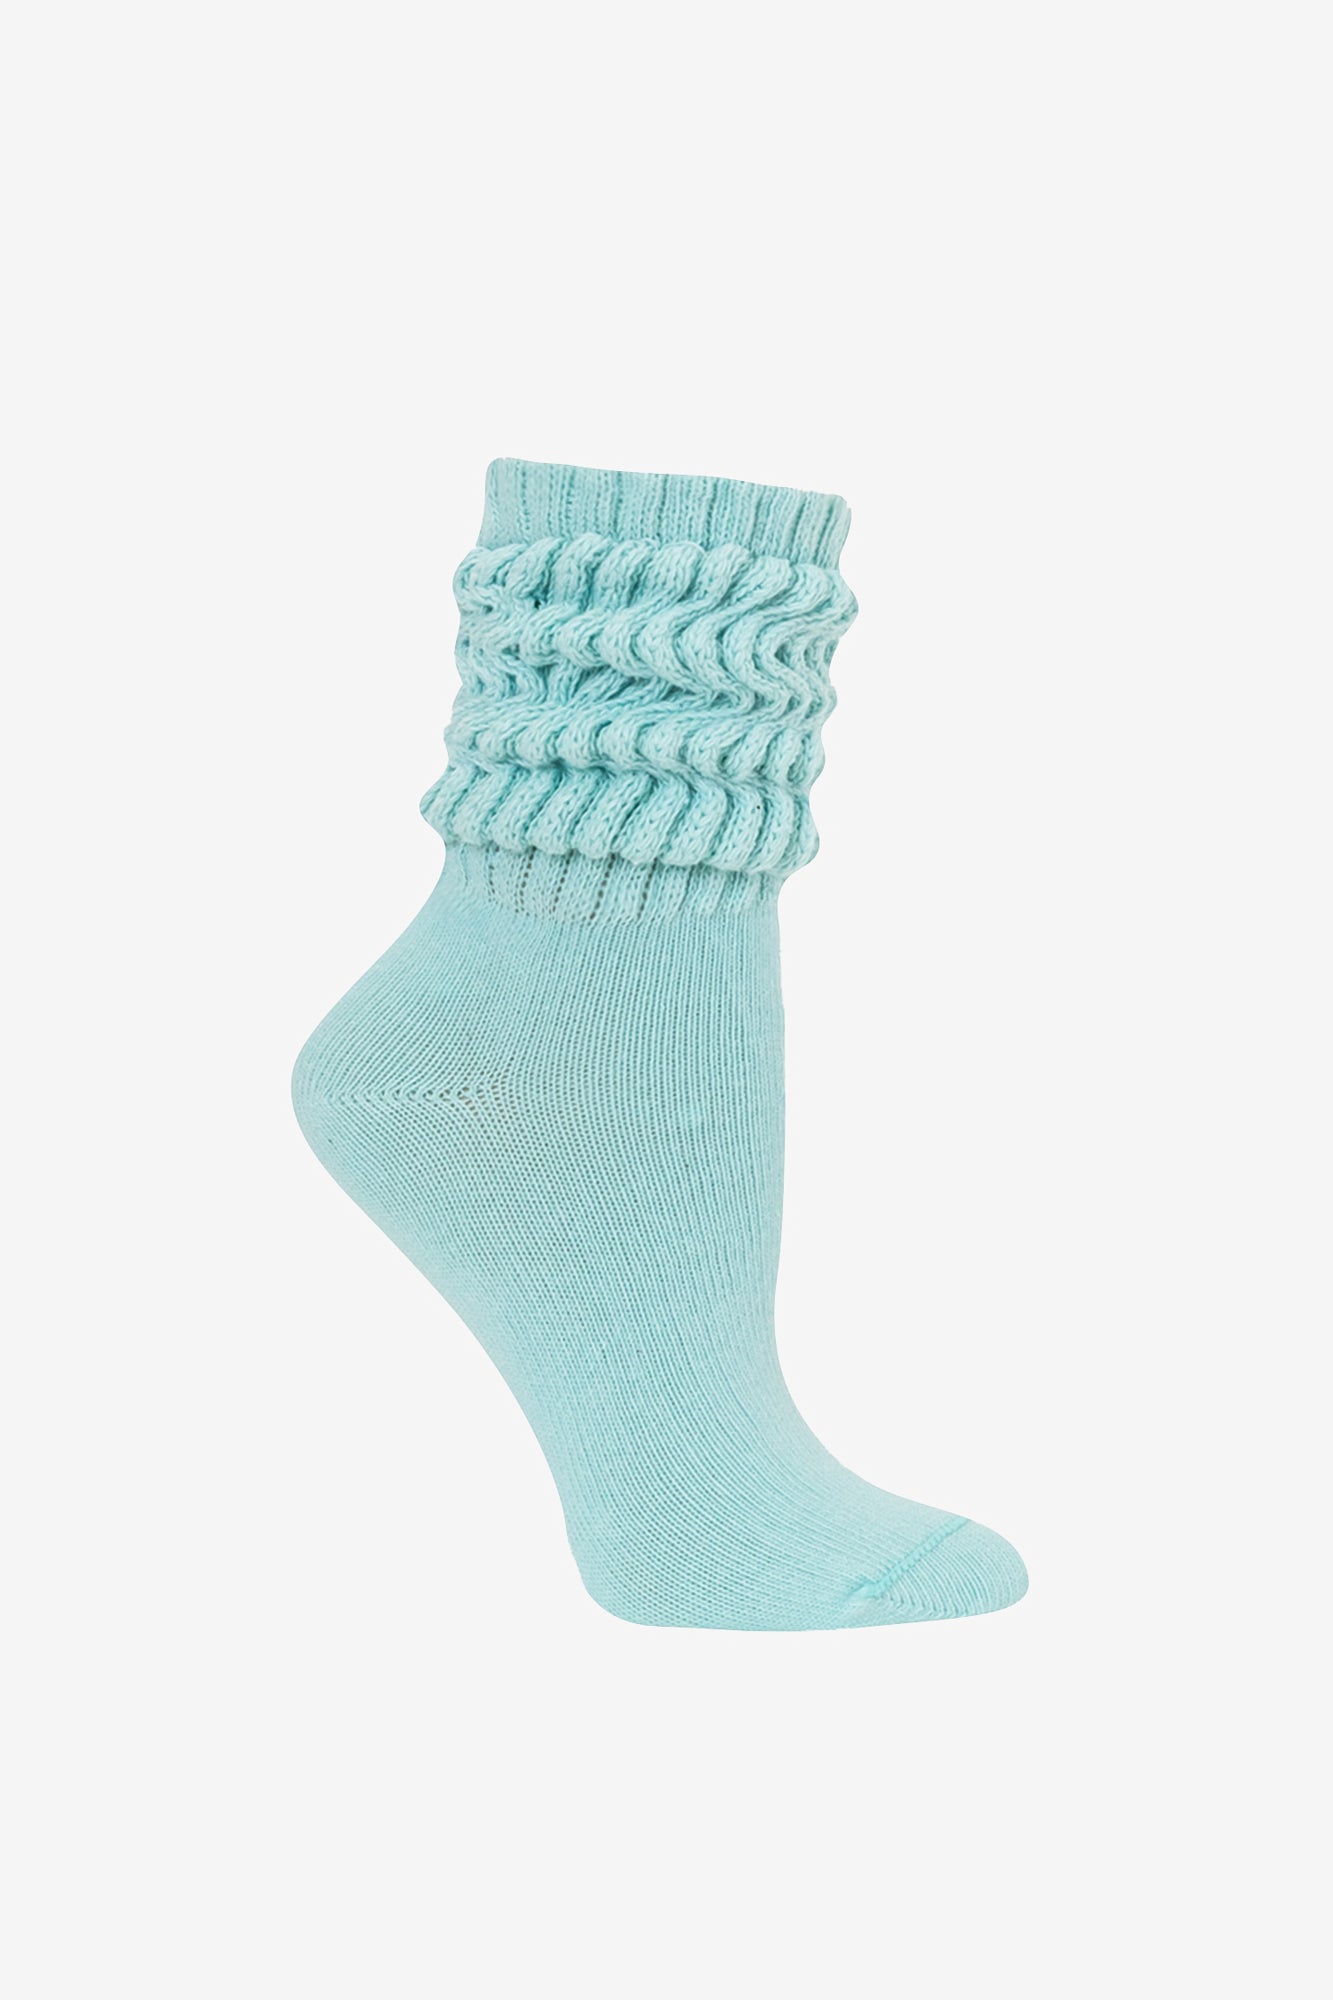 MINISLOUCH - Mini Slouch Sock